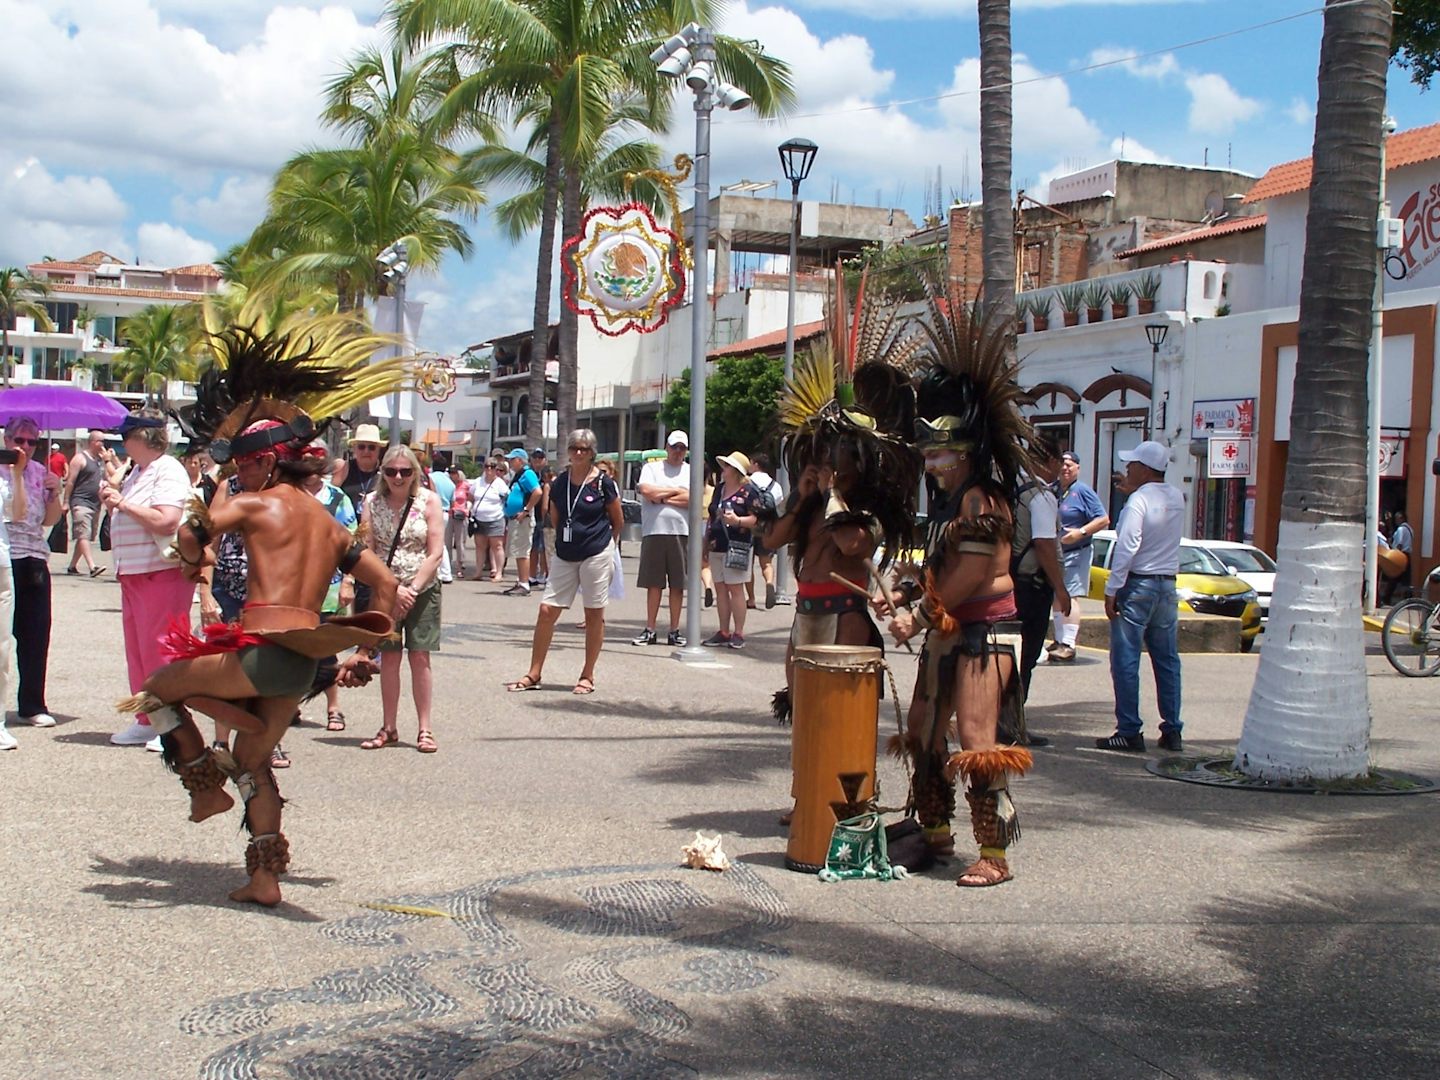 Dancers on the Malecon Boardwalk - Puerto Vallarta